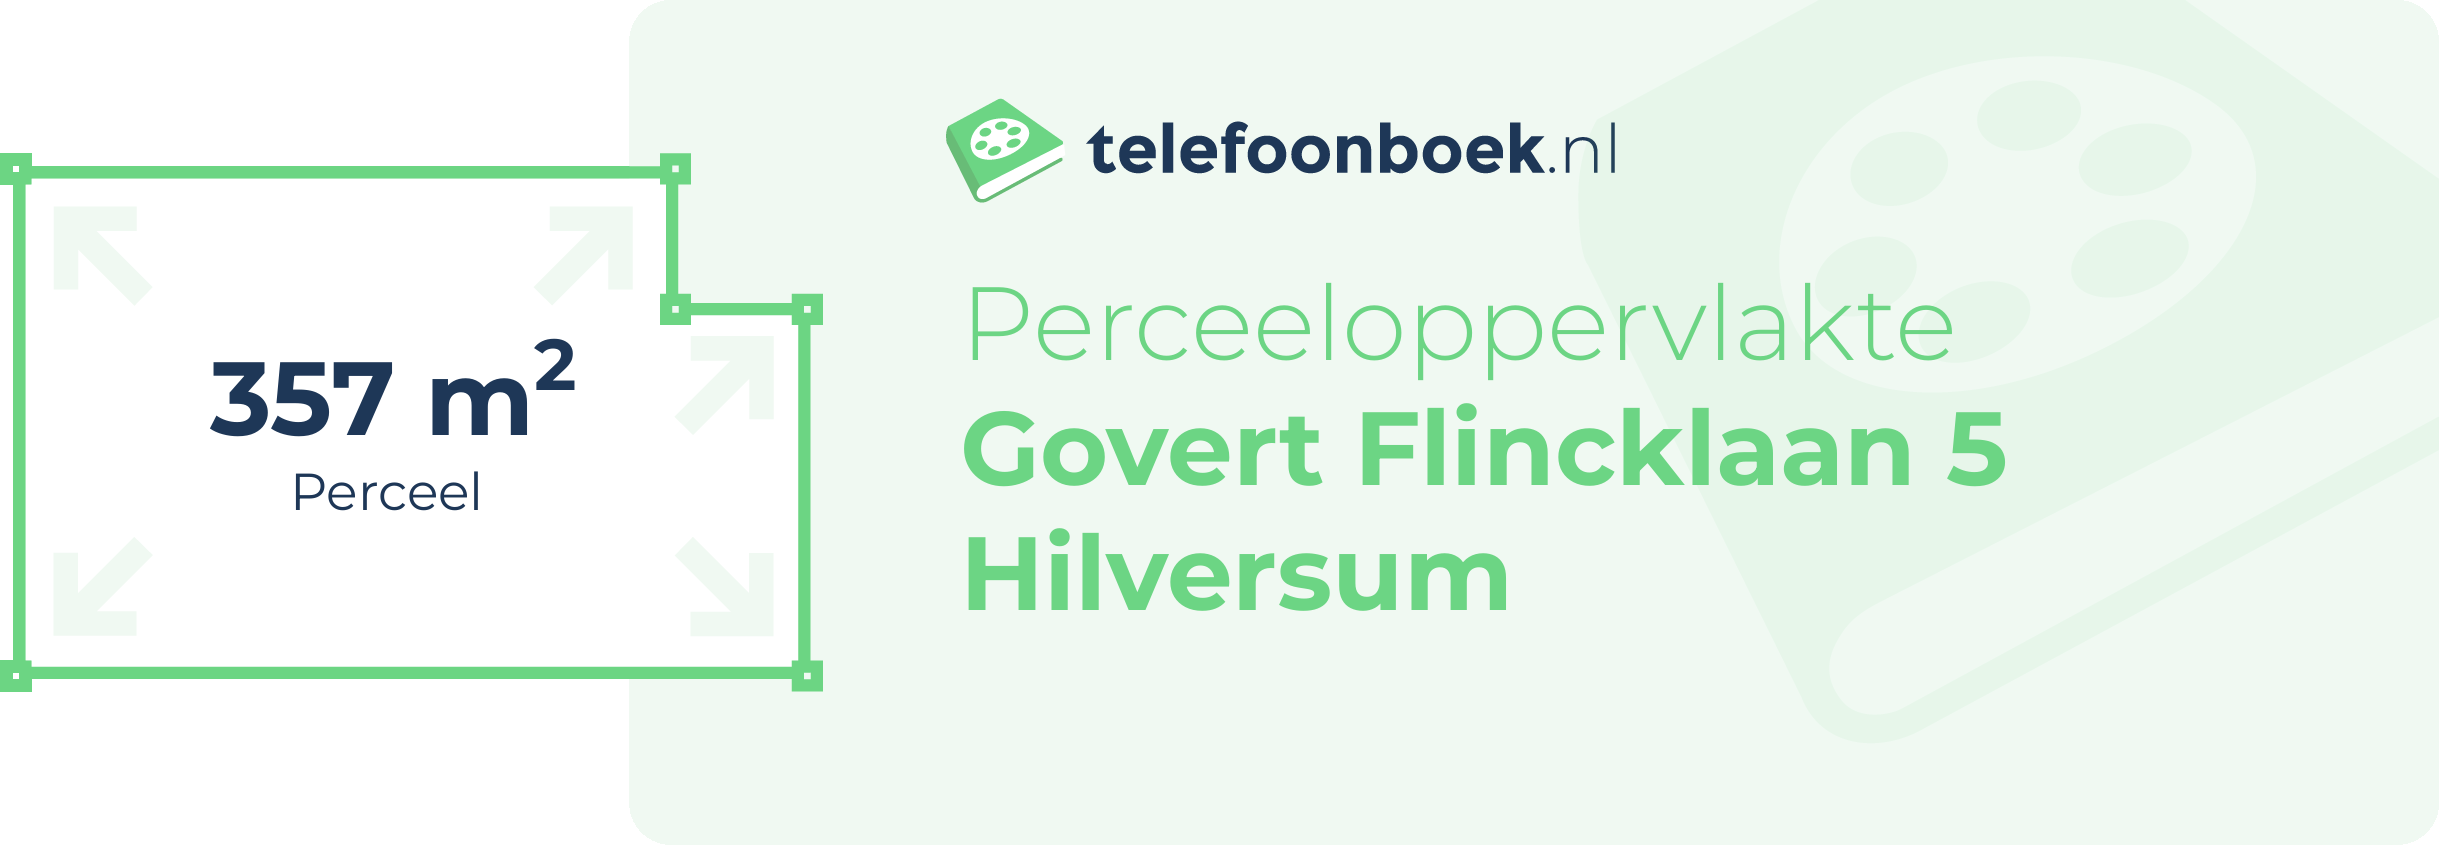 Perceeloppervlakte Govert Flincklaan 5 Hilversum